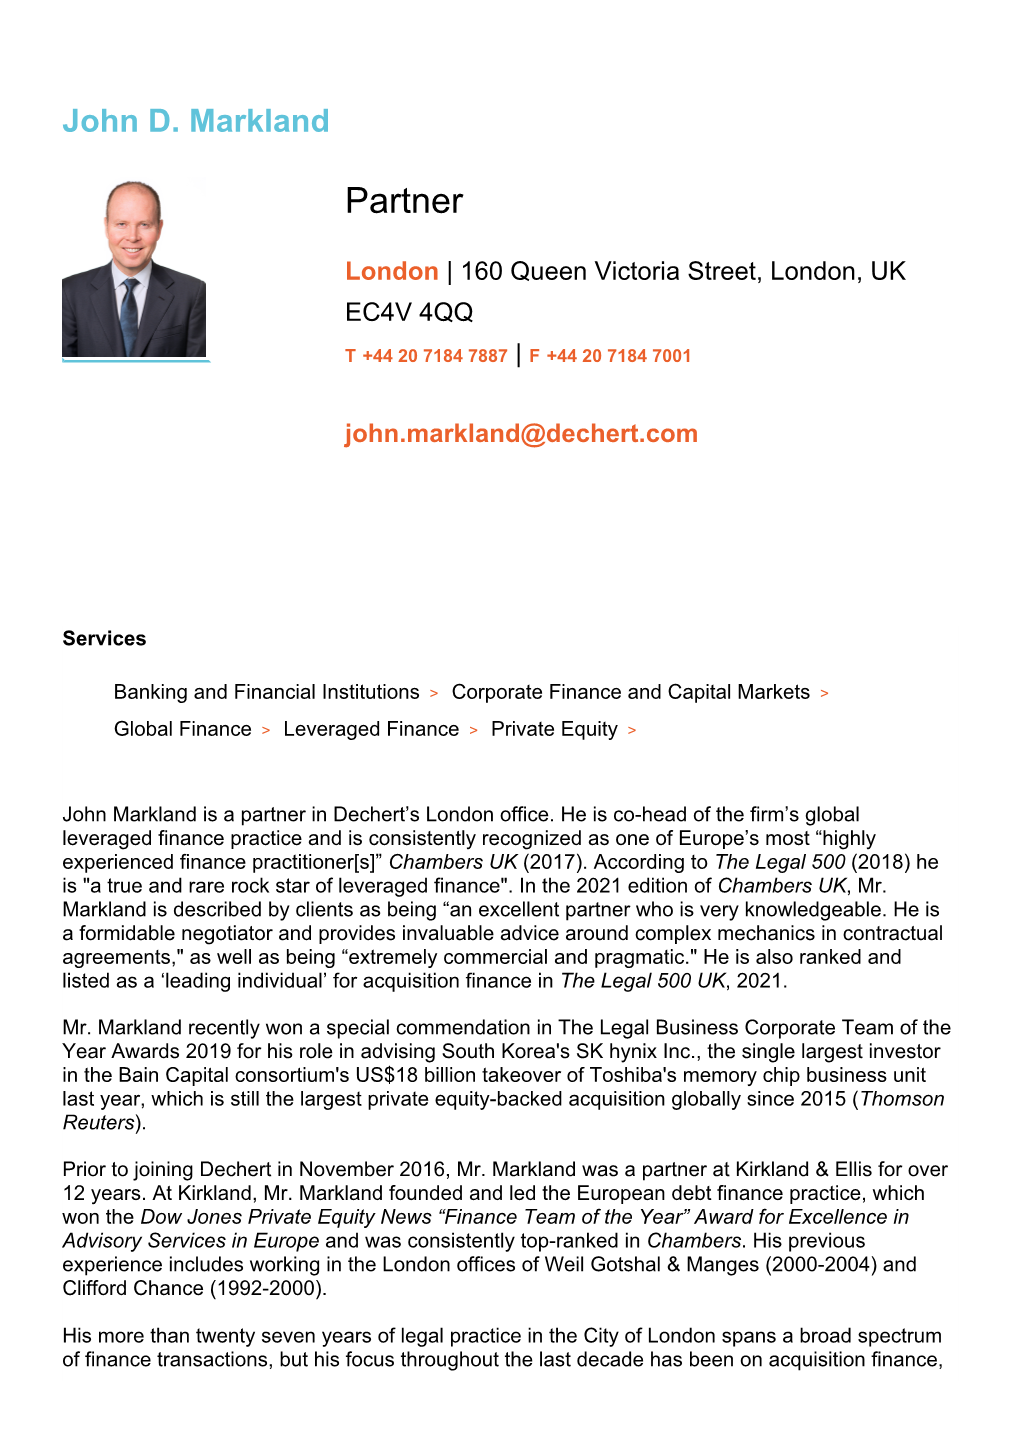 John Markland Is a Partner in Dechert’S London Office